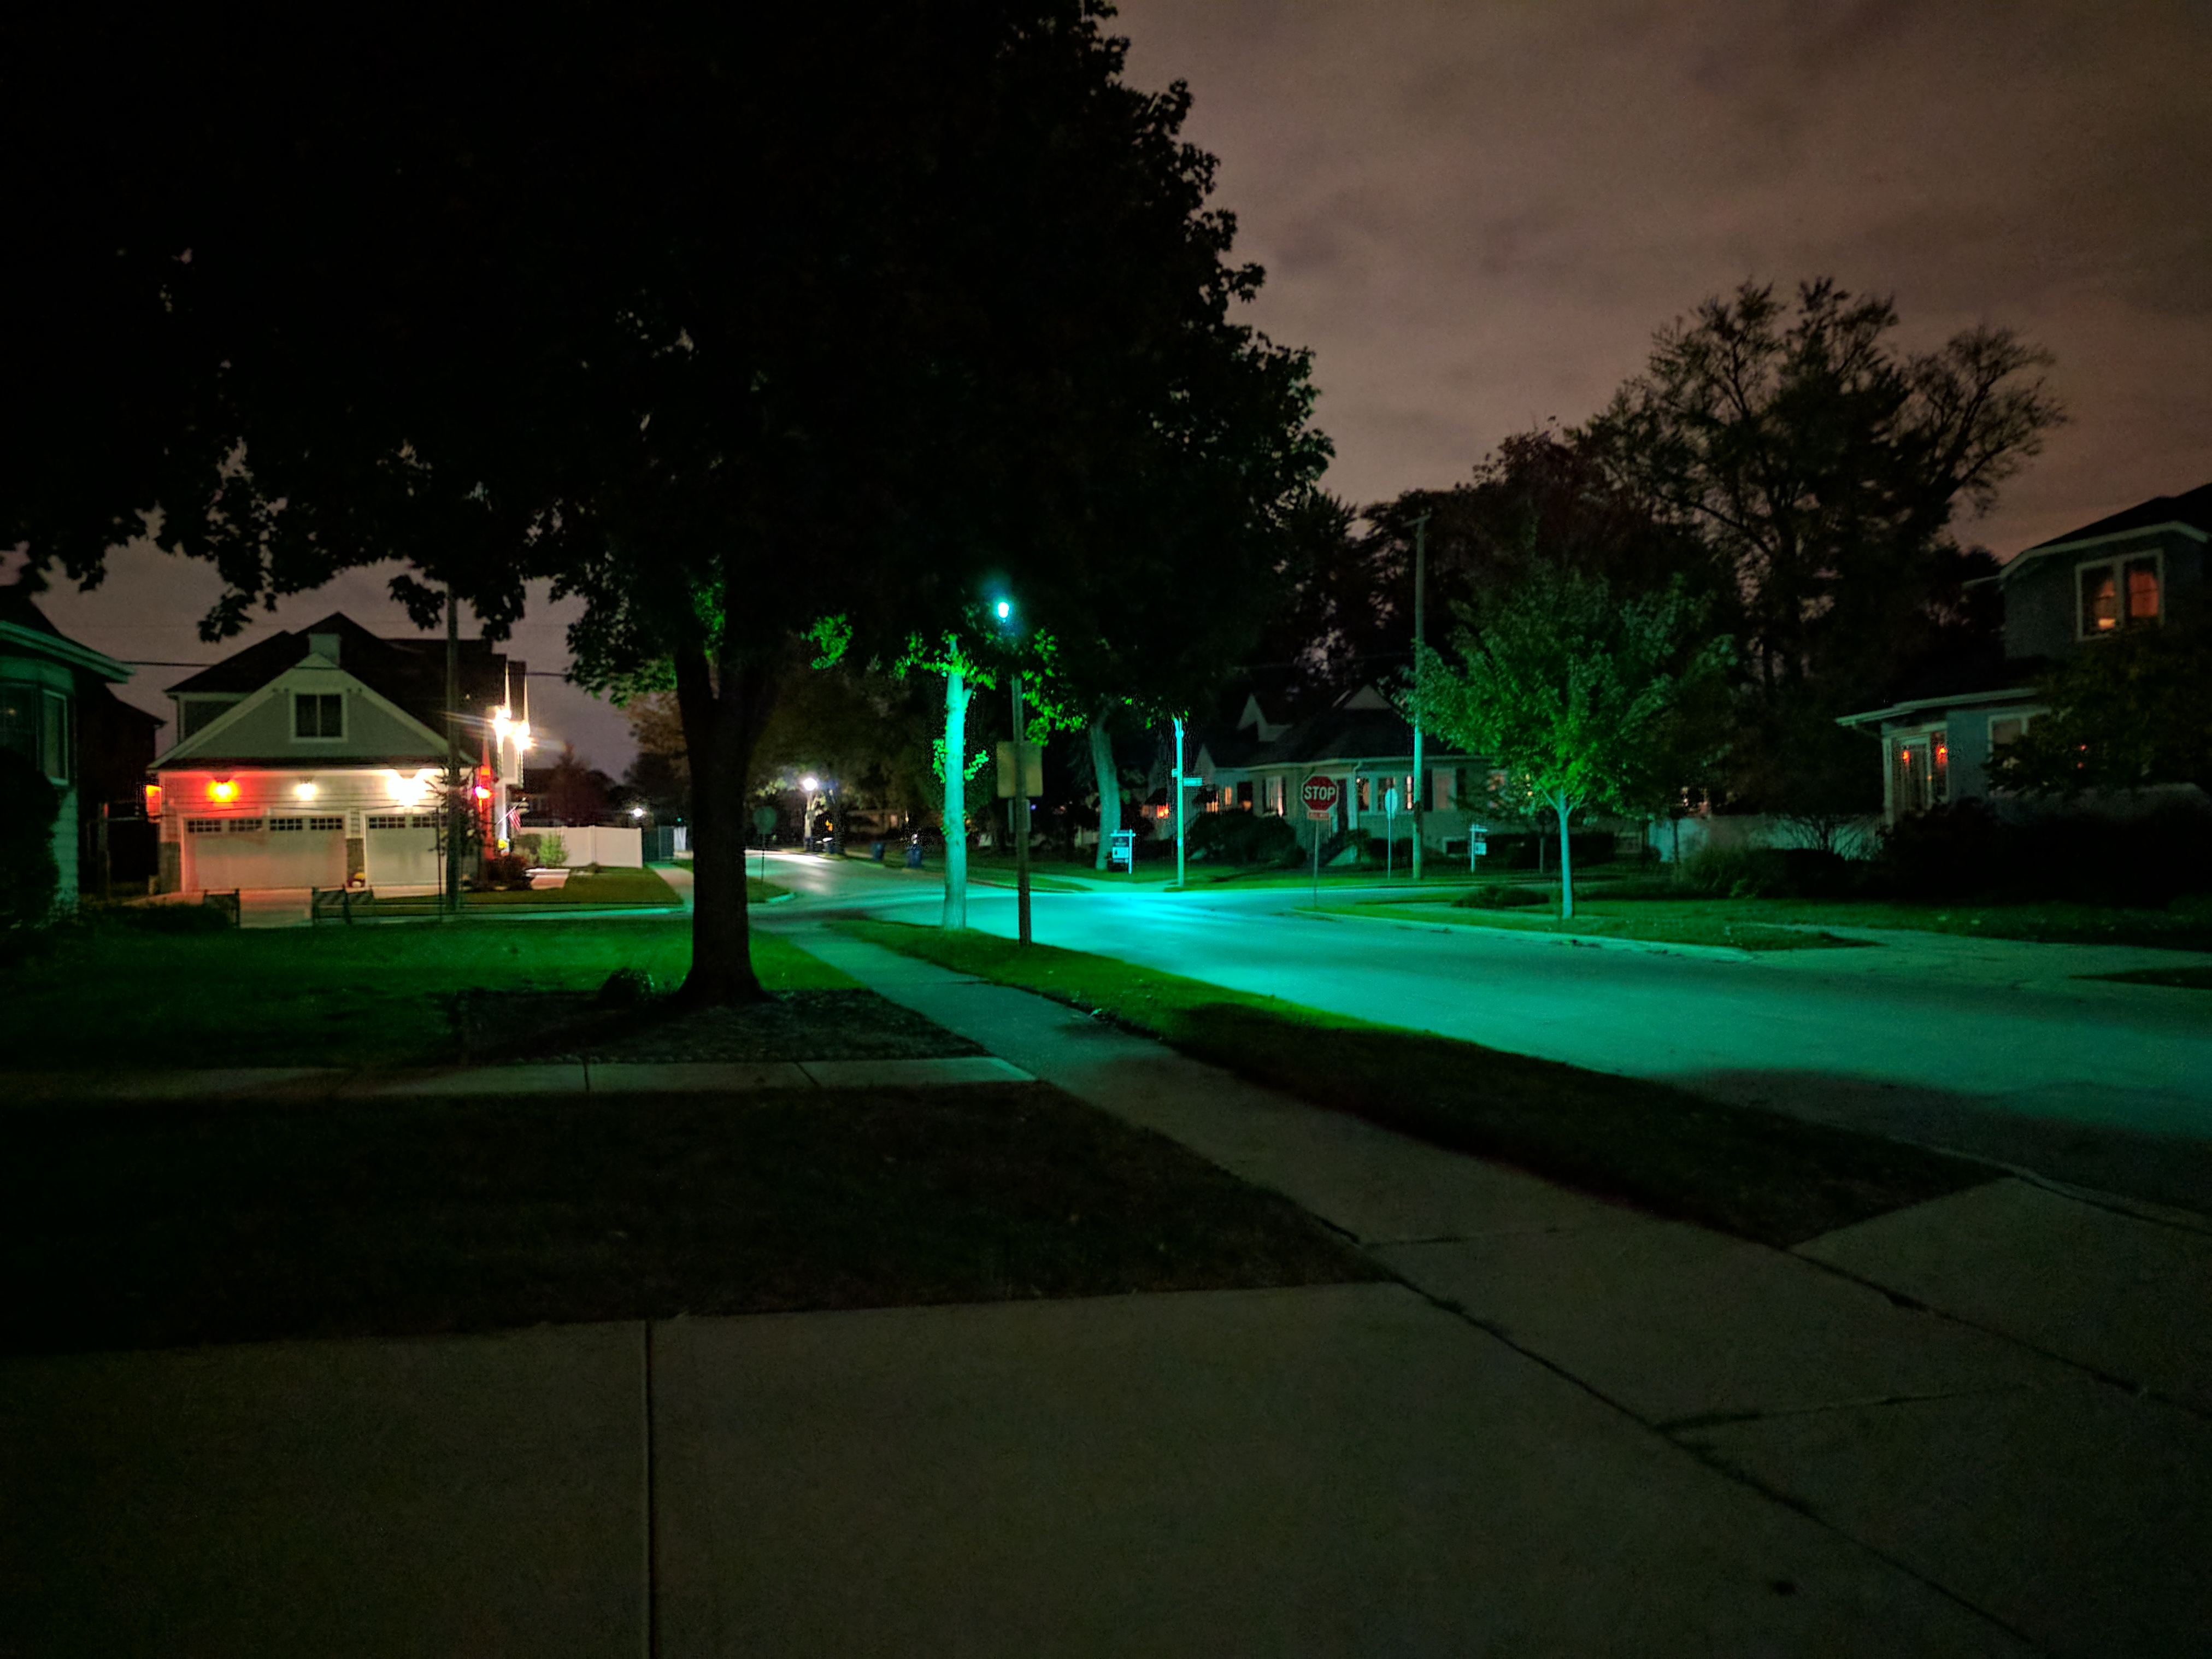 Green tint from streetlights on Pixel camera - Album on Imgur